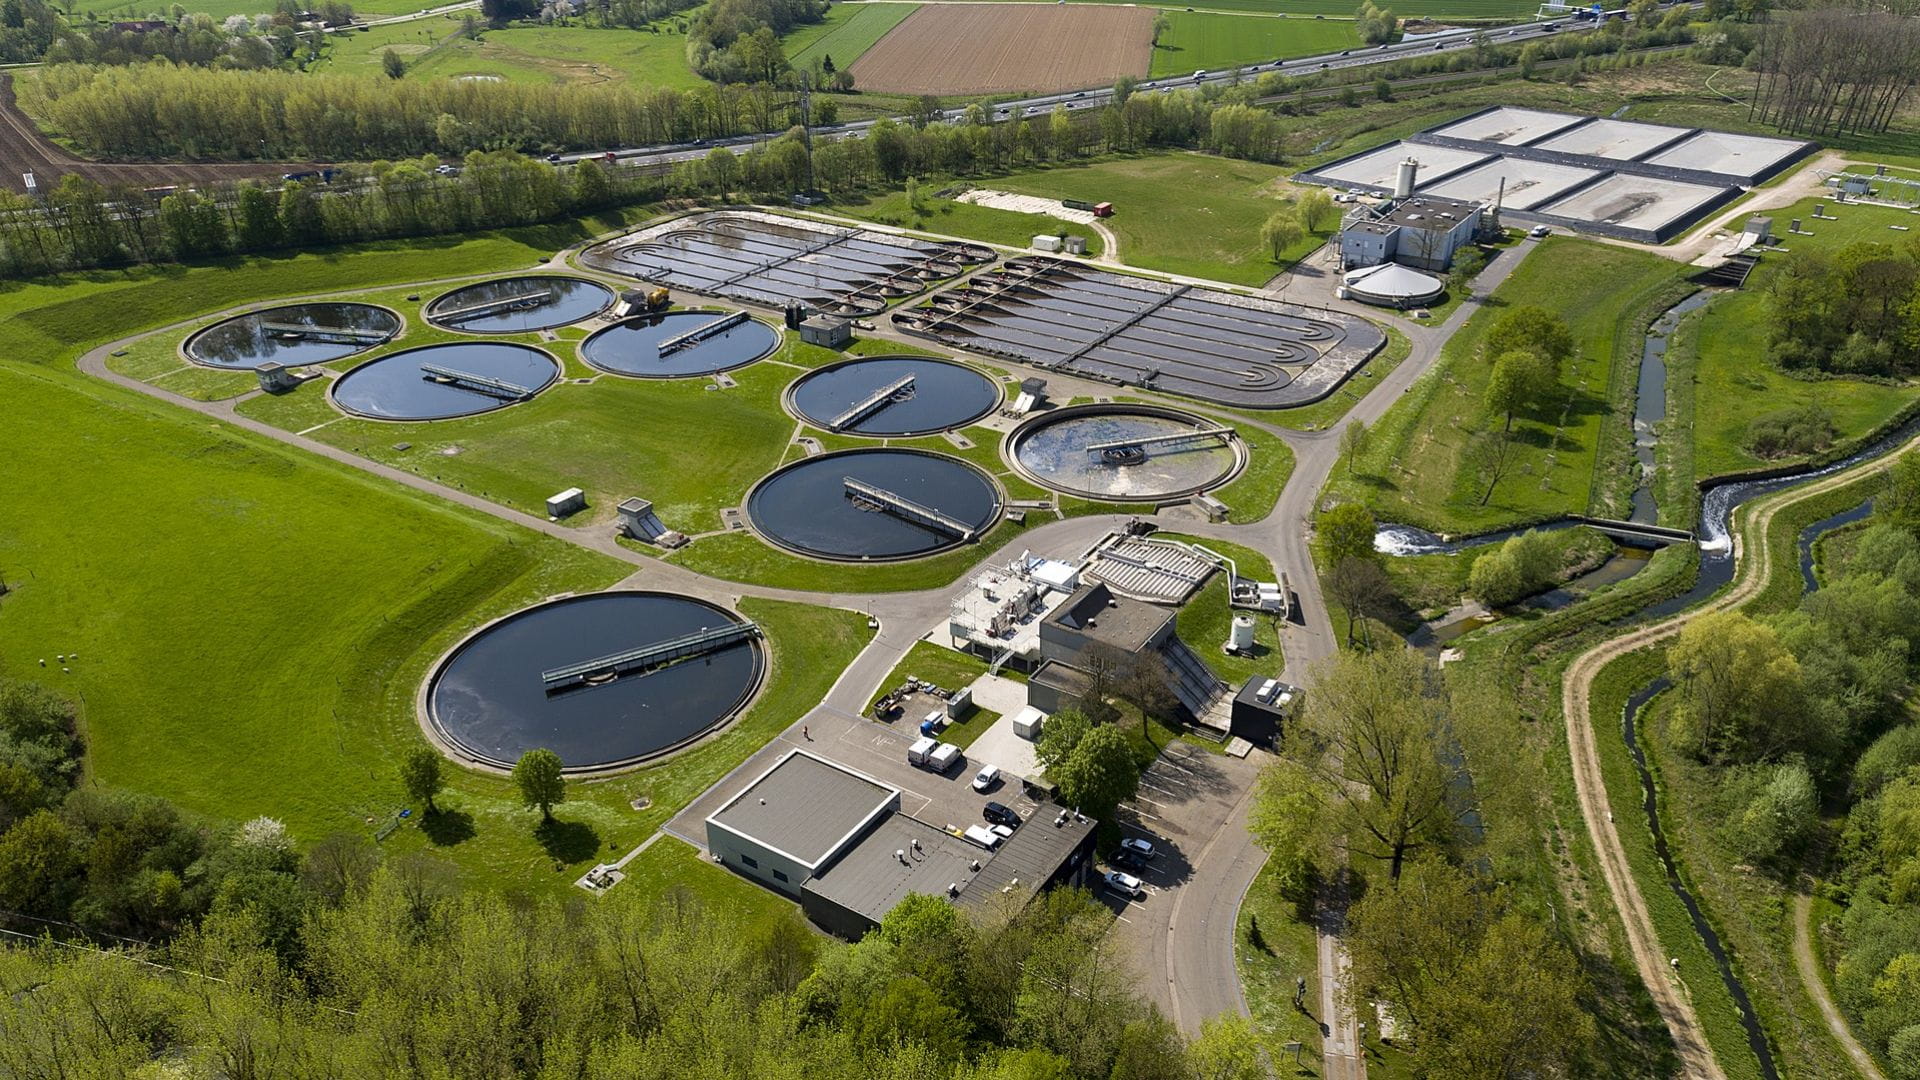 Hoensbroek Wastewater Treatment Plant